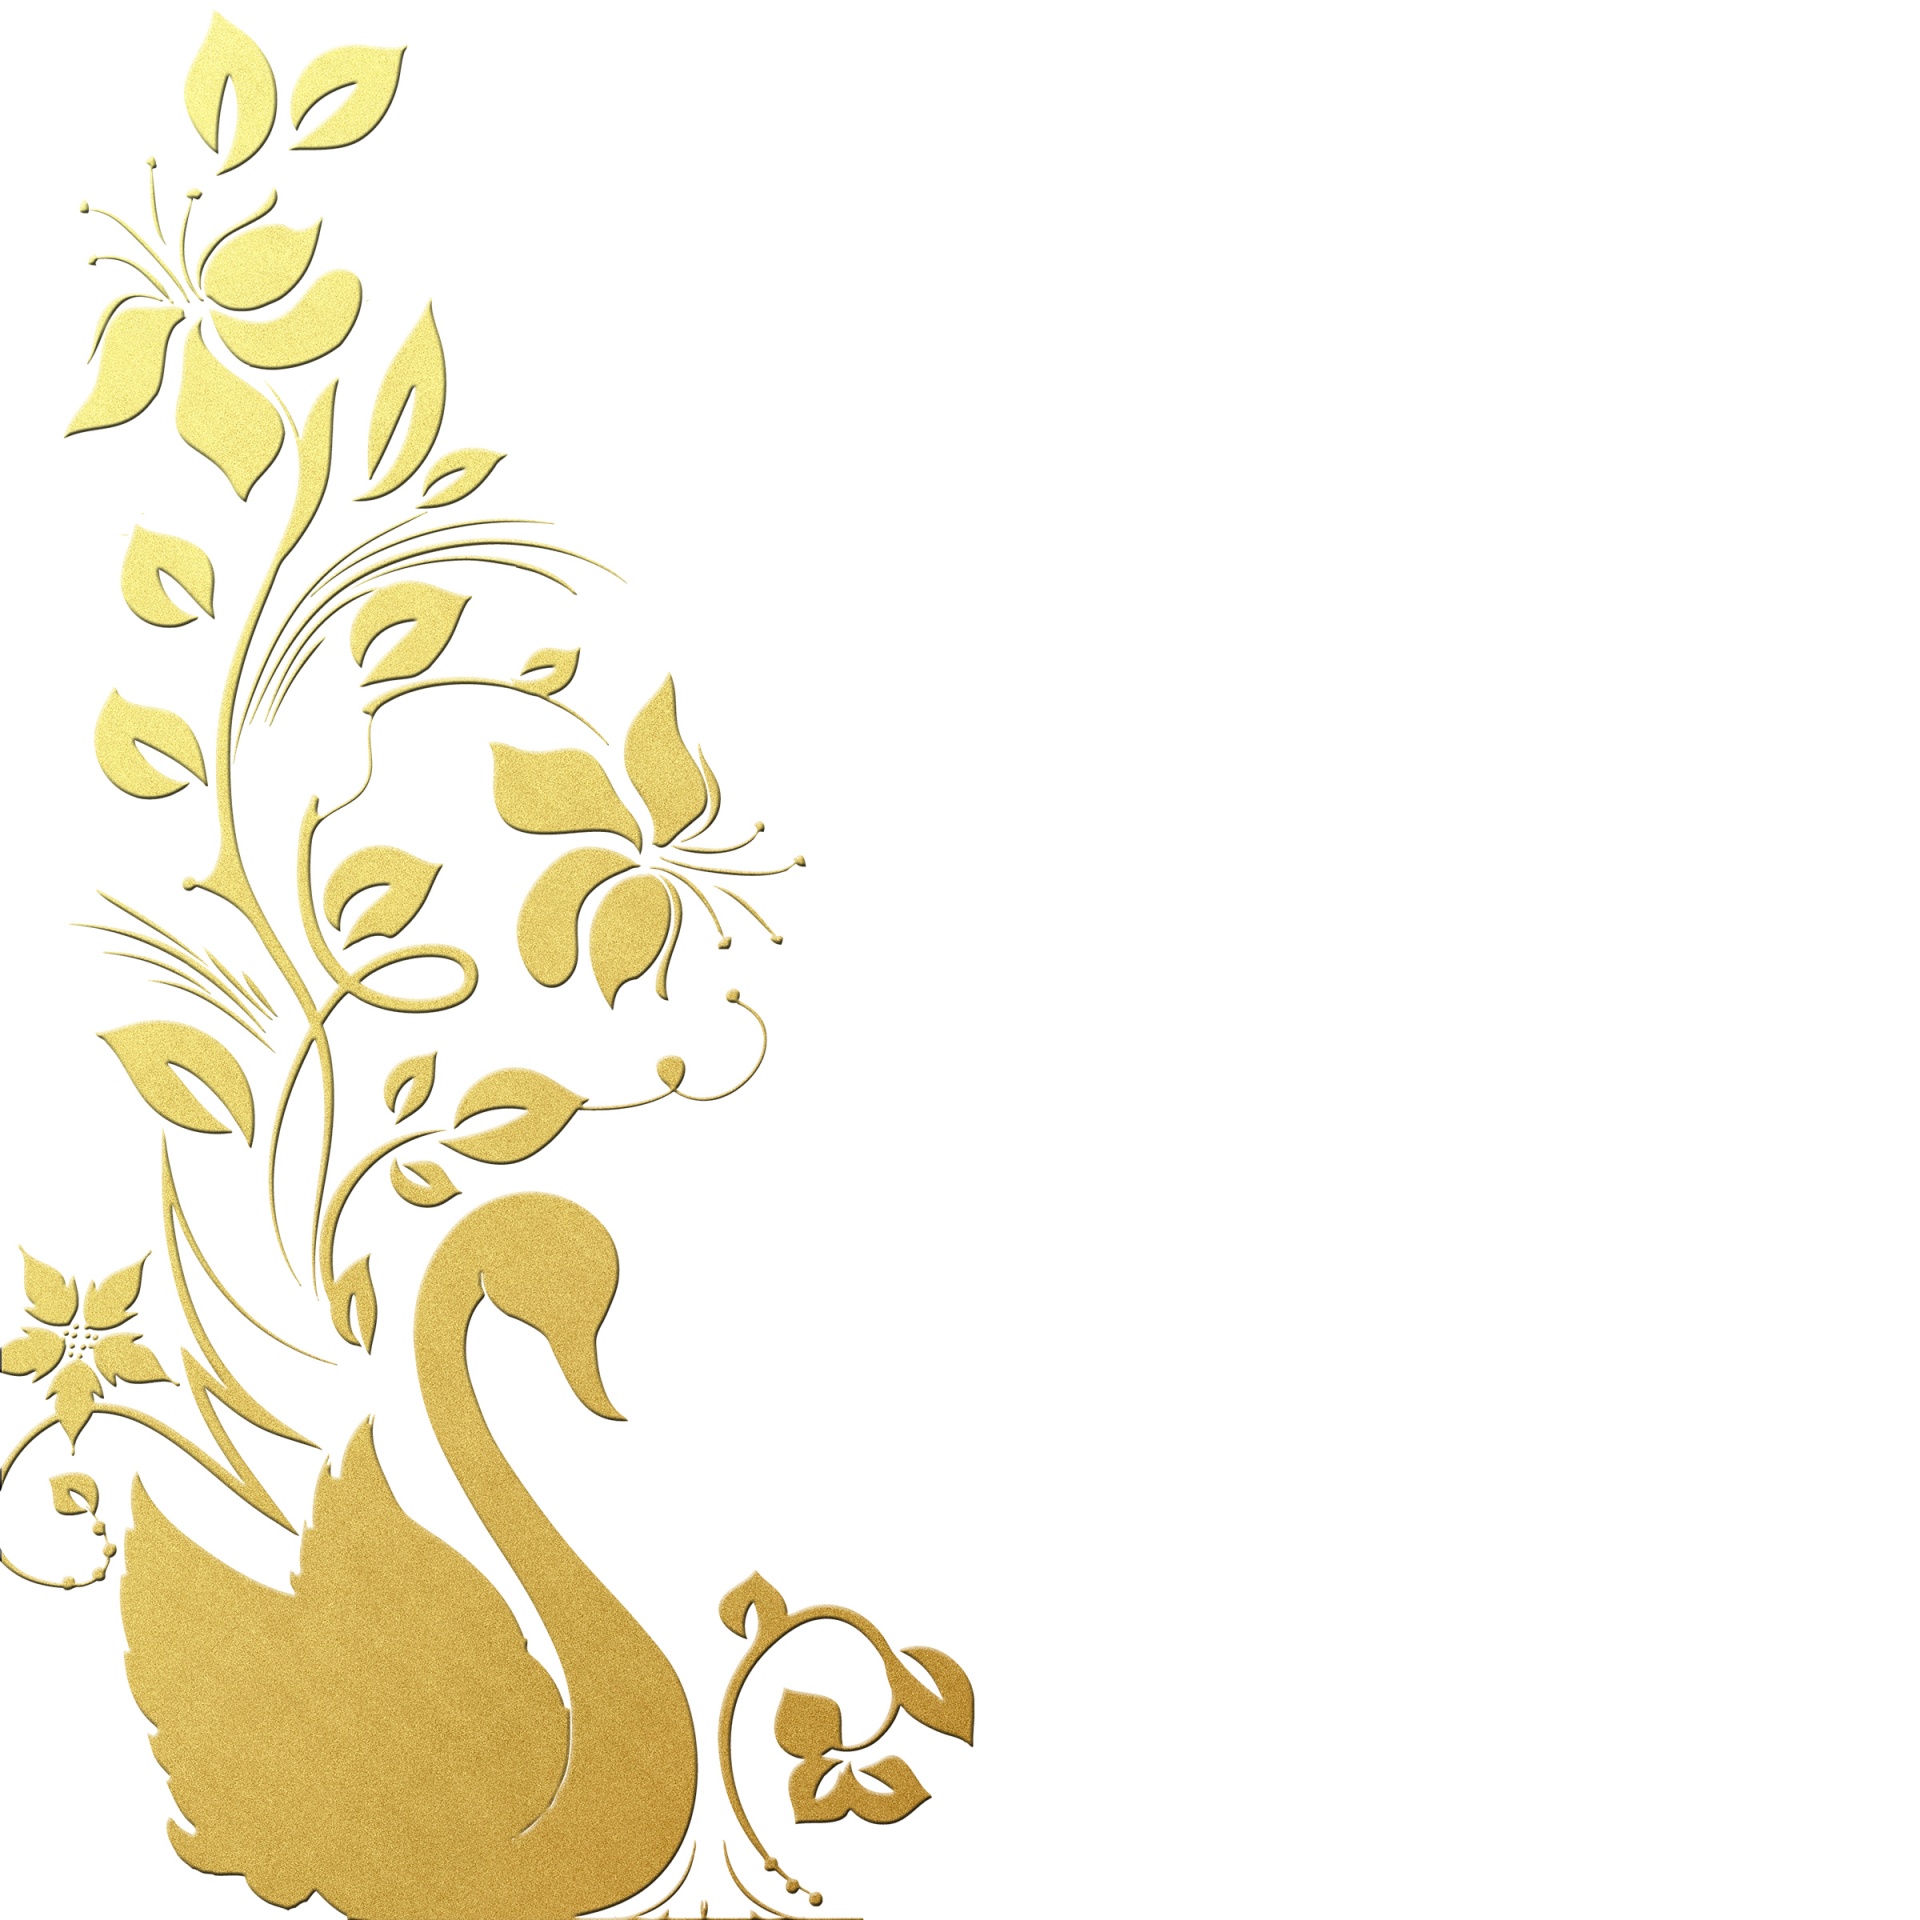 Swan,gold,golden,decorative,decoration